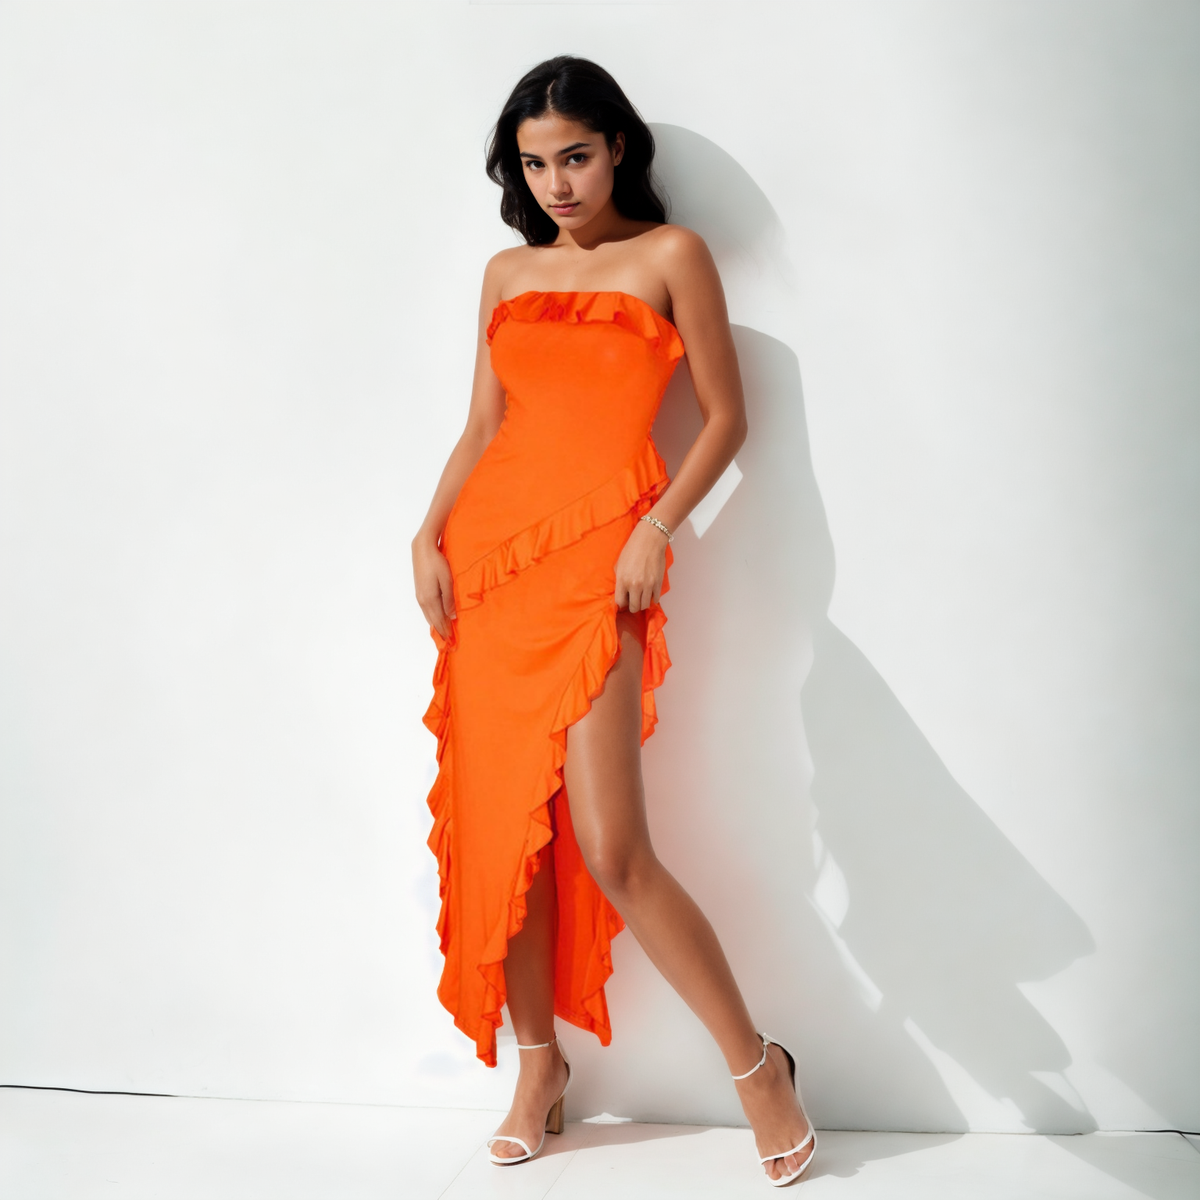 Desert Rose Elegance: Middle East Tube Top Ruffled Orange High Slit Evening Party Dress - StylinArts